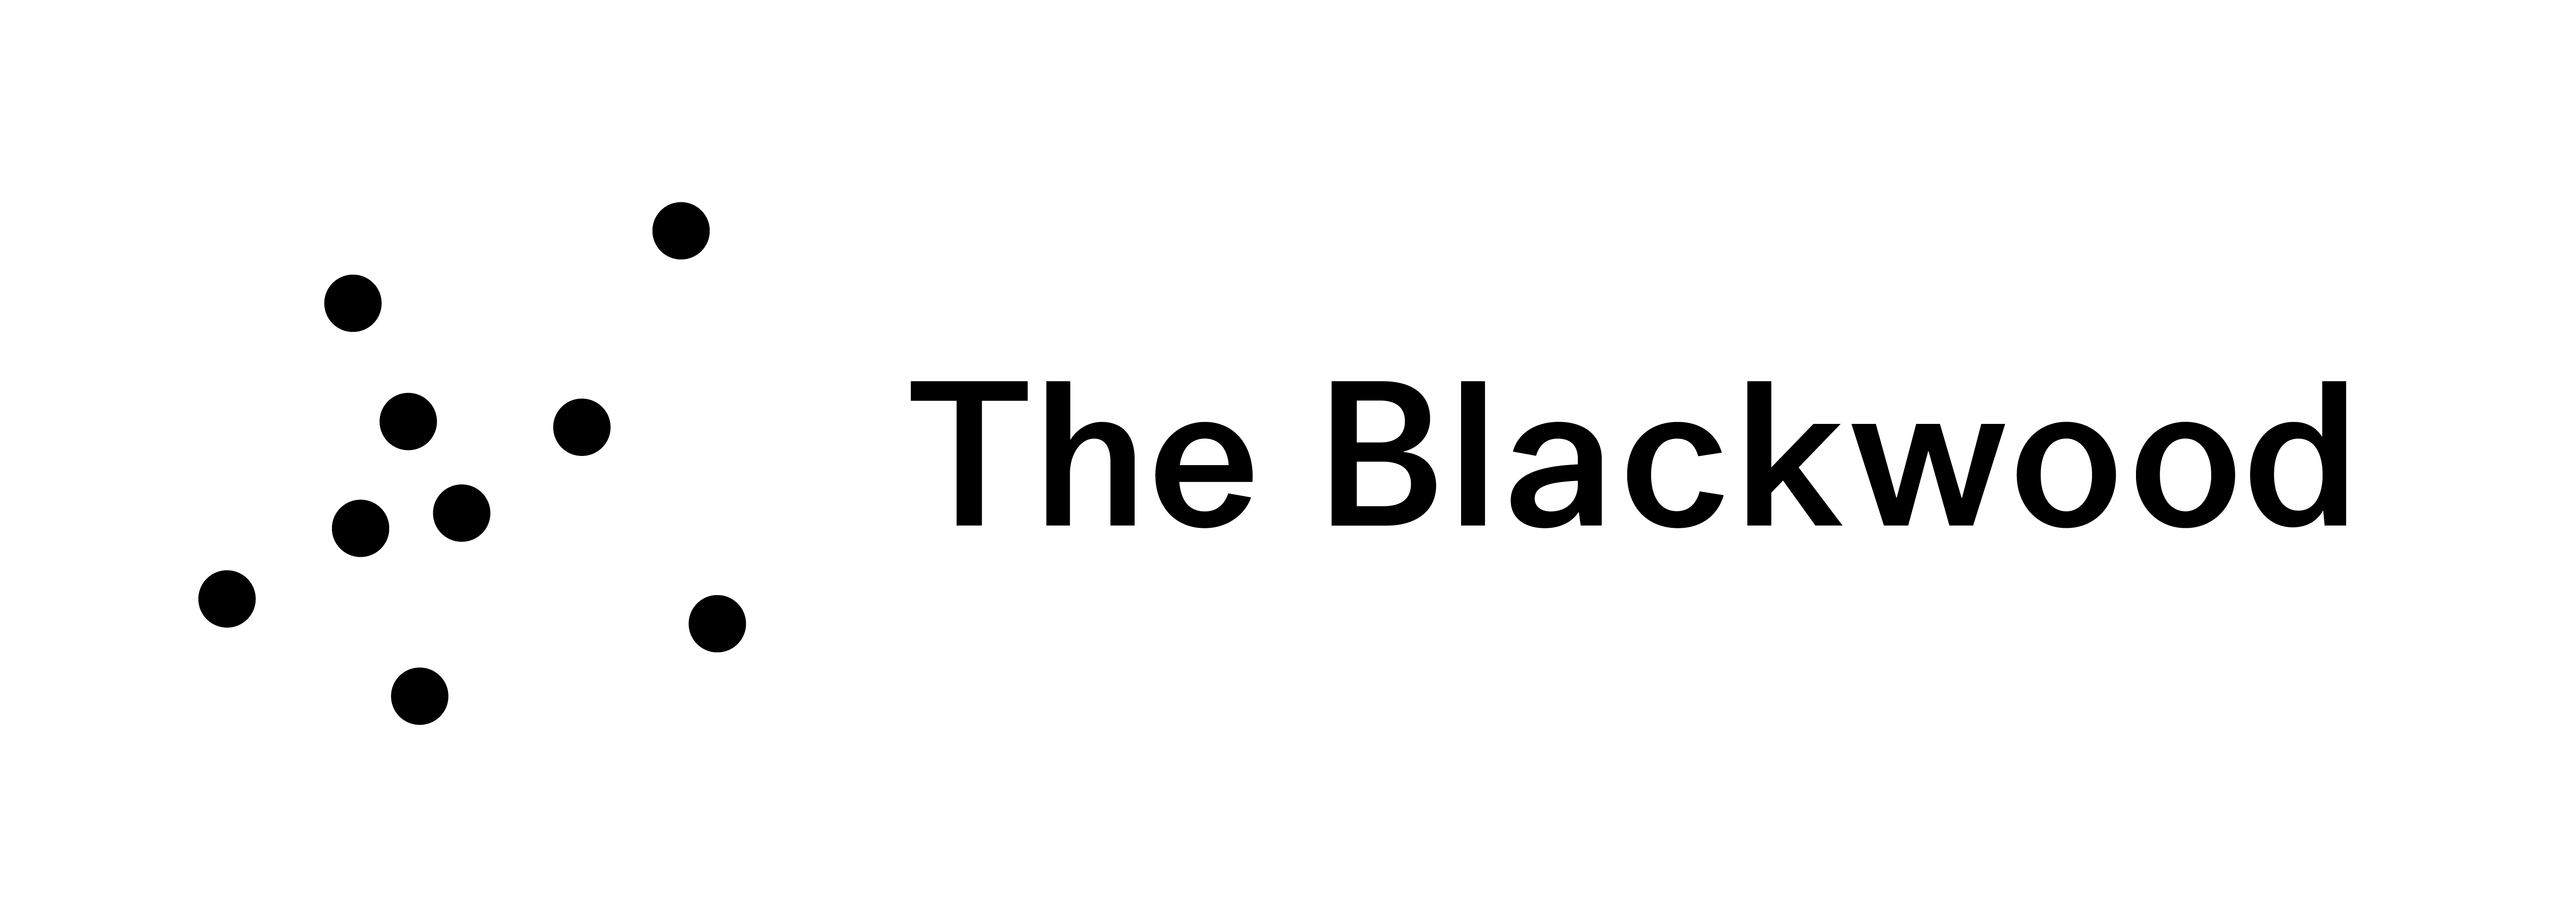 The Blackwood logo
